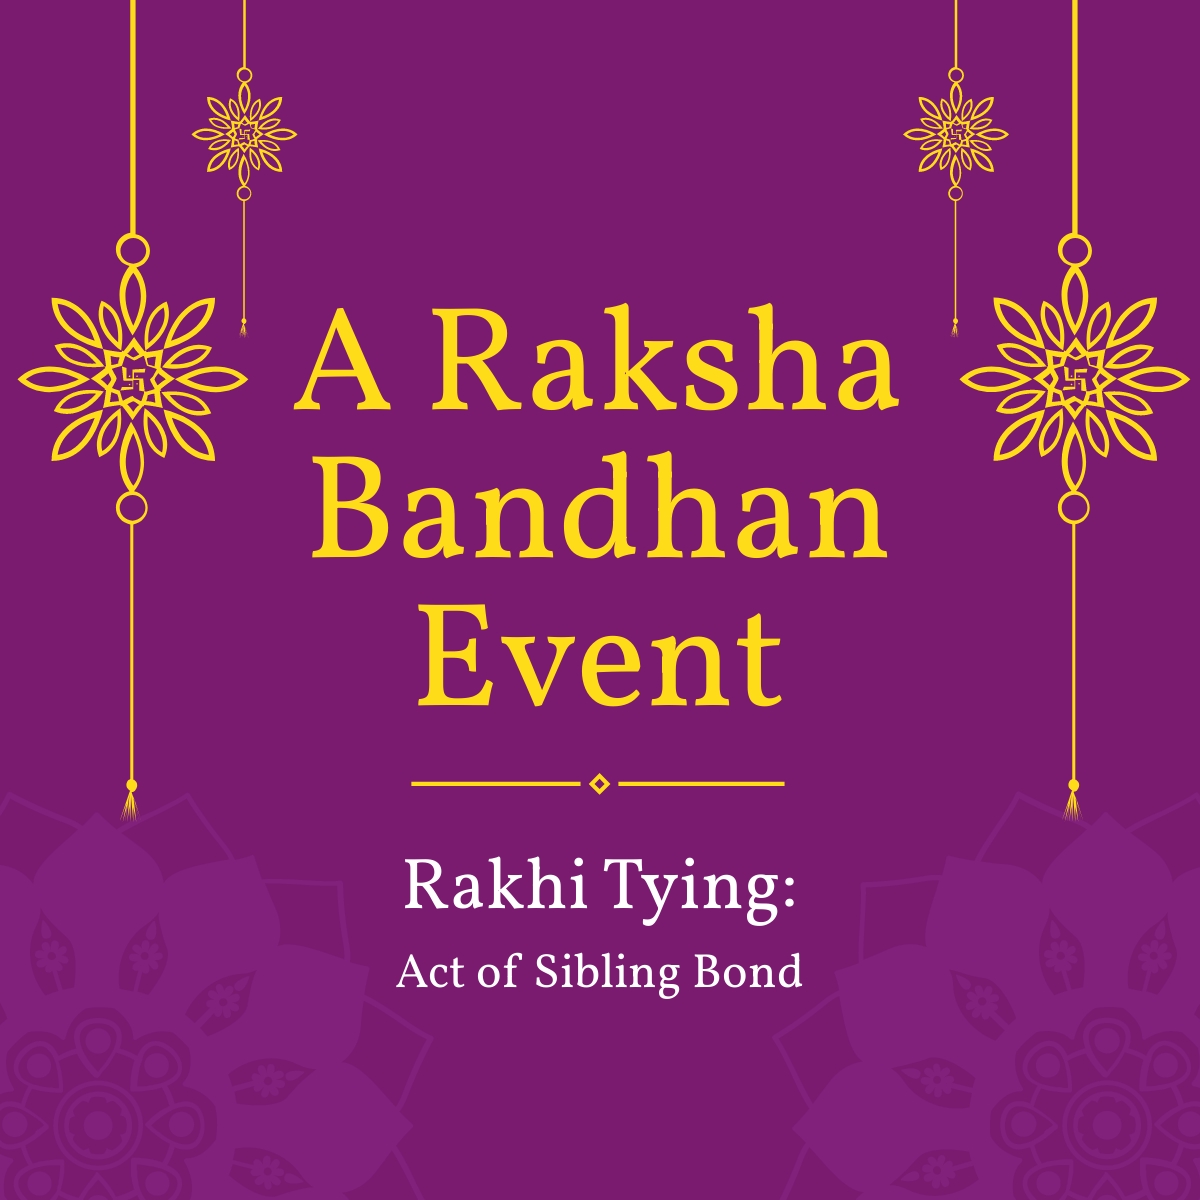 Raksha Bandhan Event Linkedin Post Template